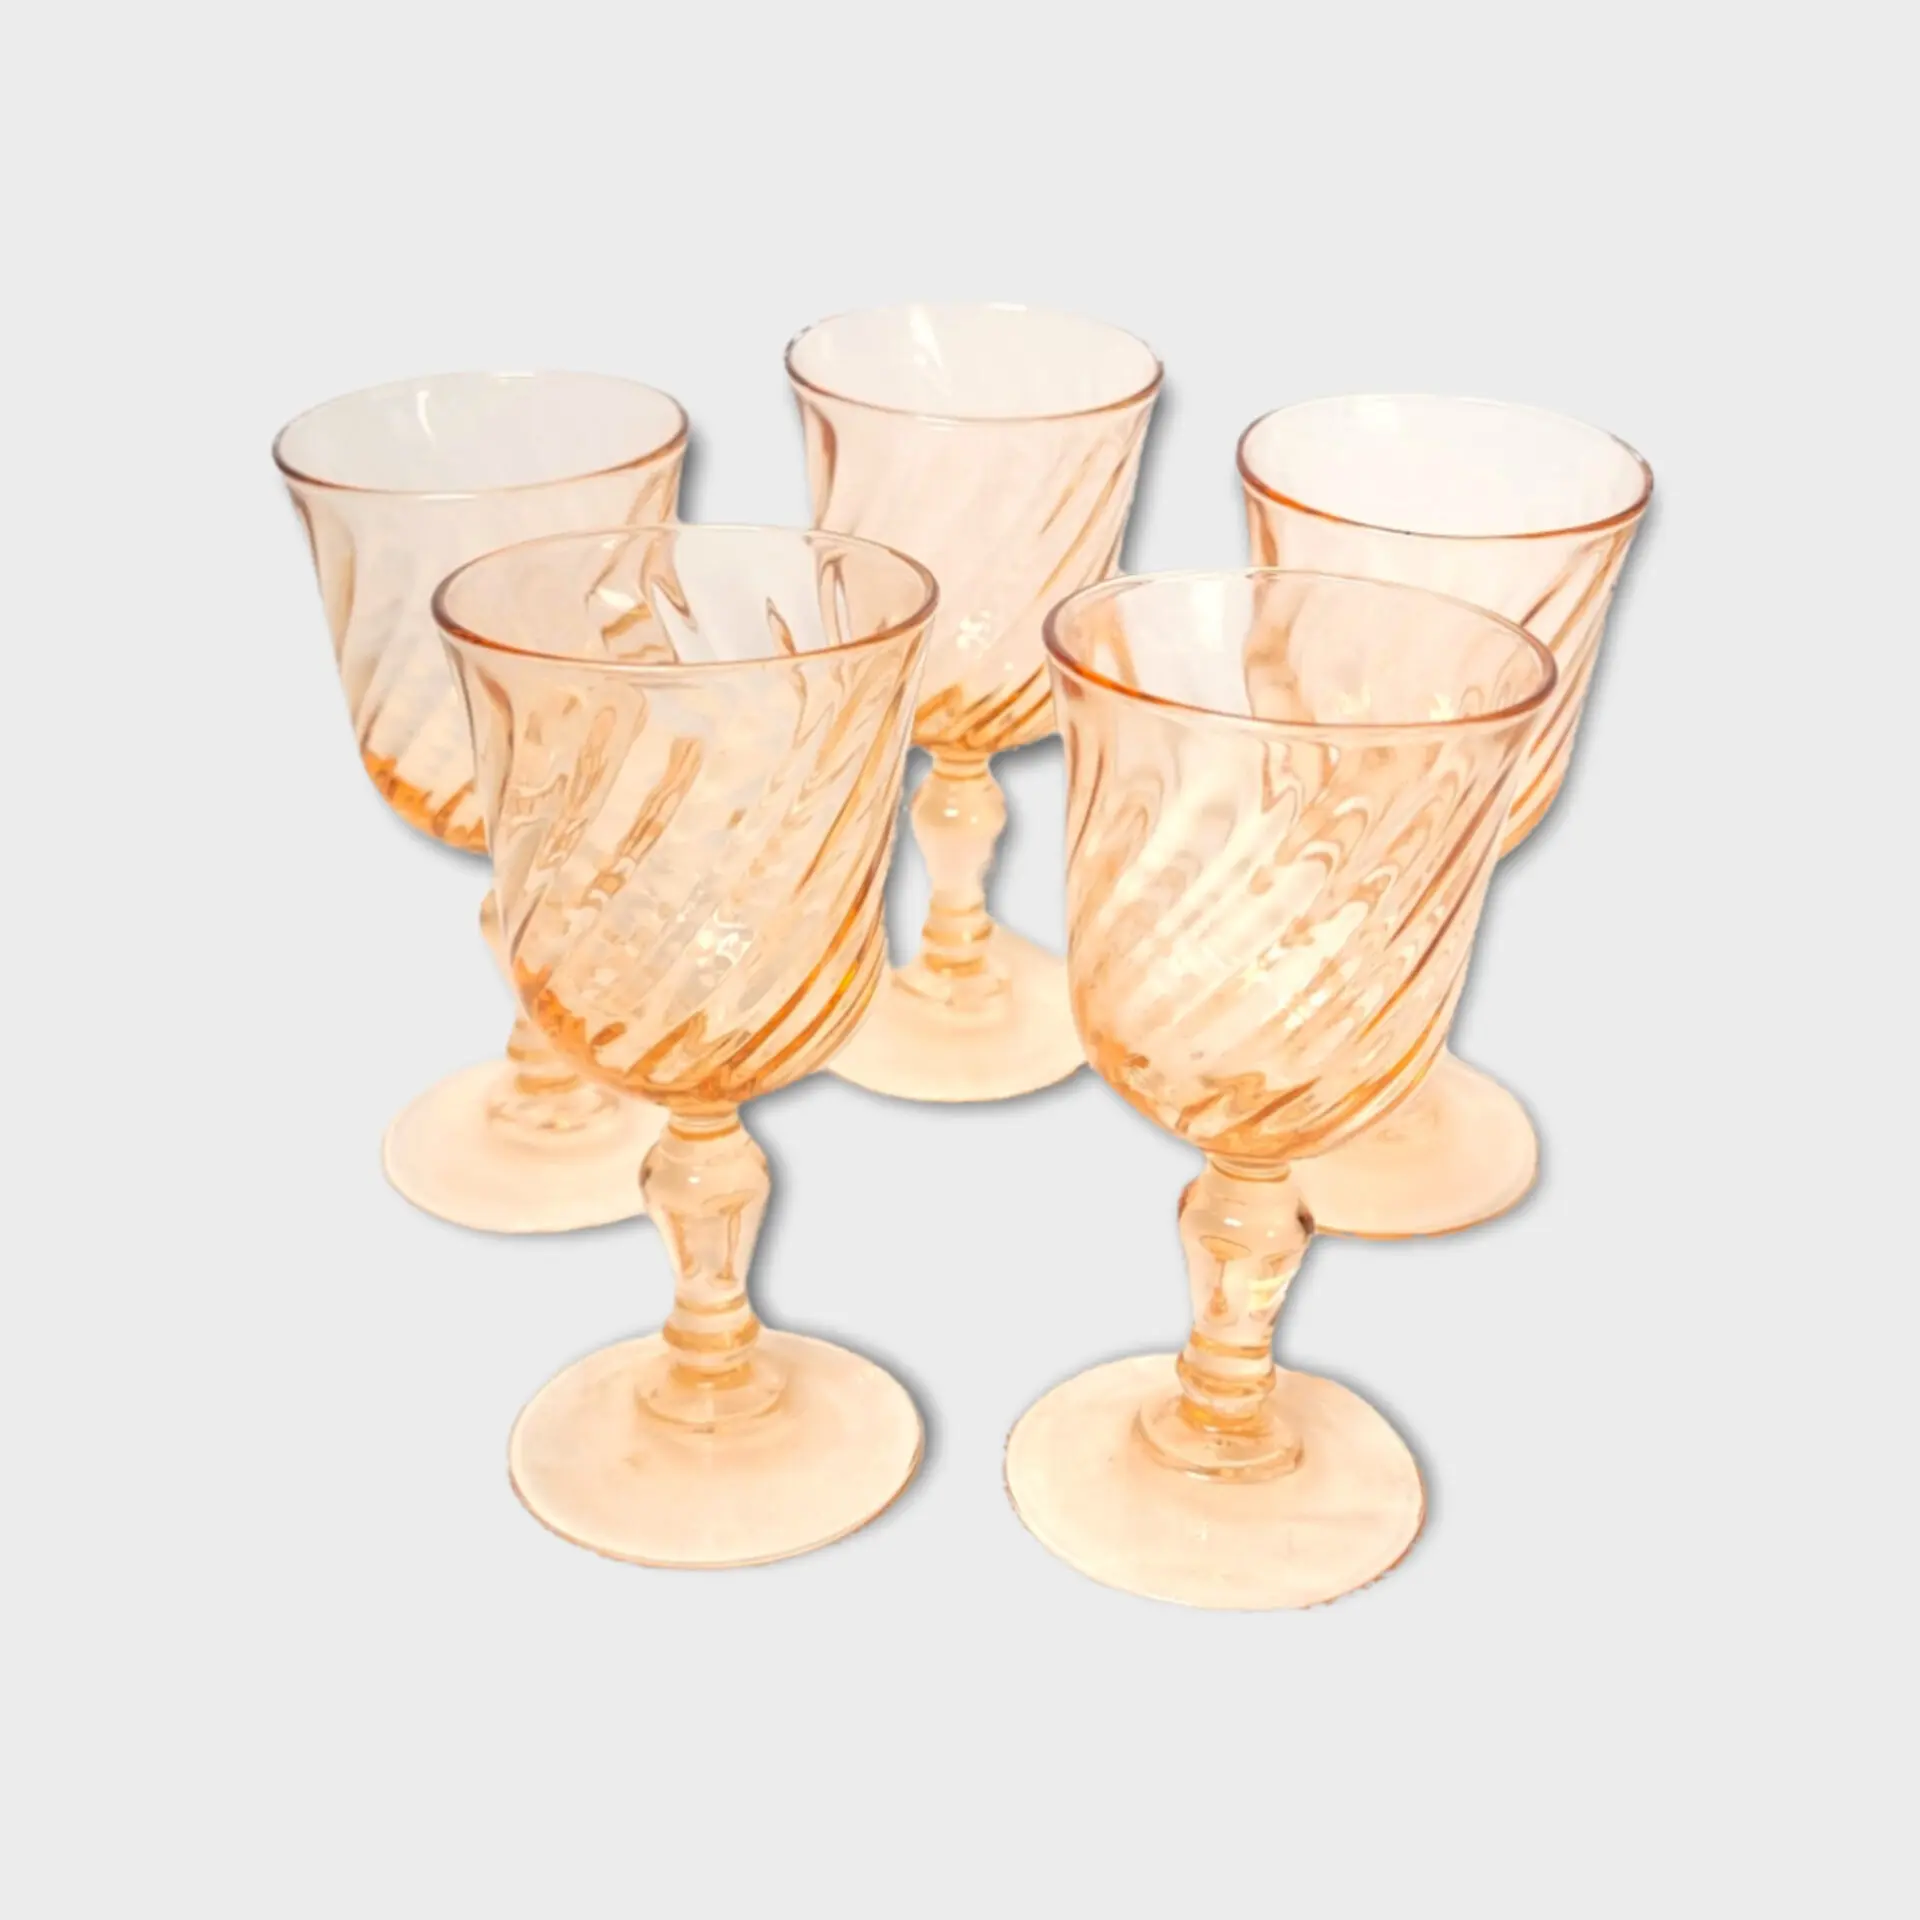 Set de 3 petits verres Ricard vintage